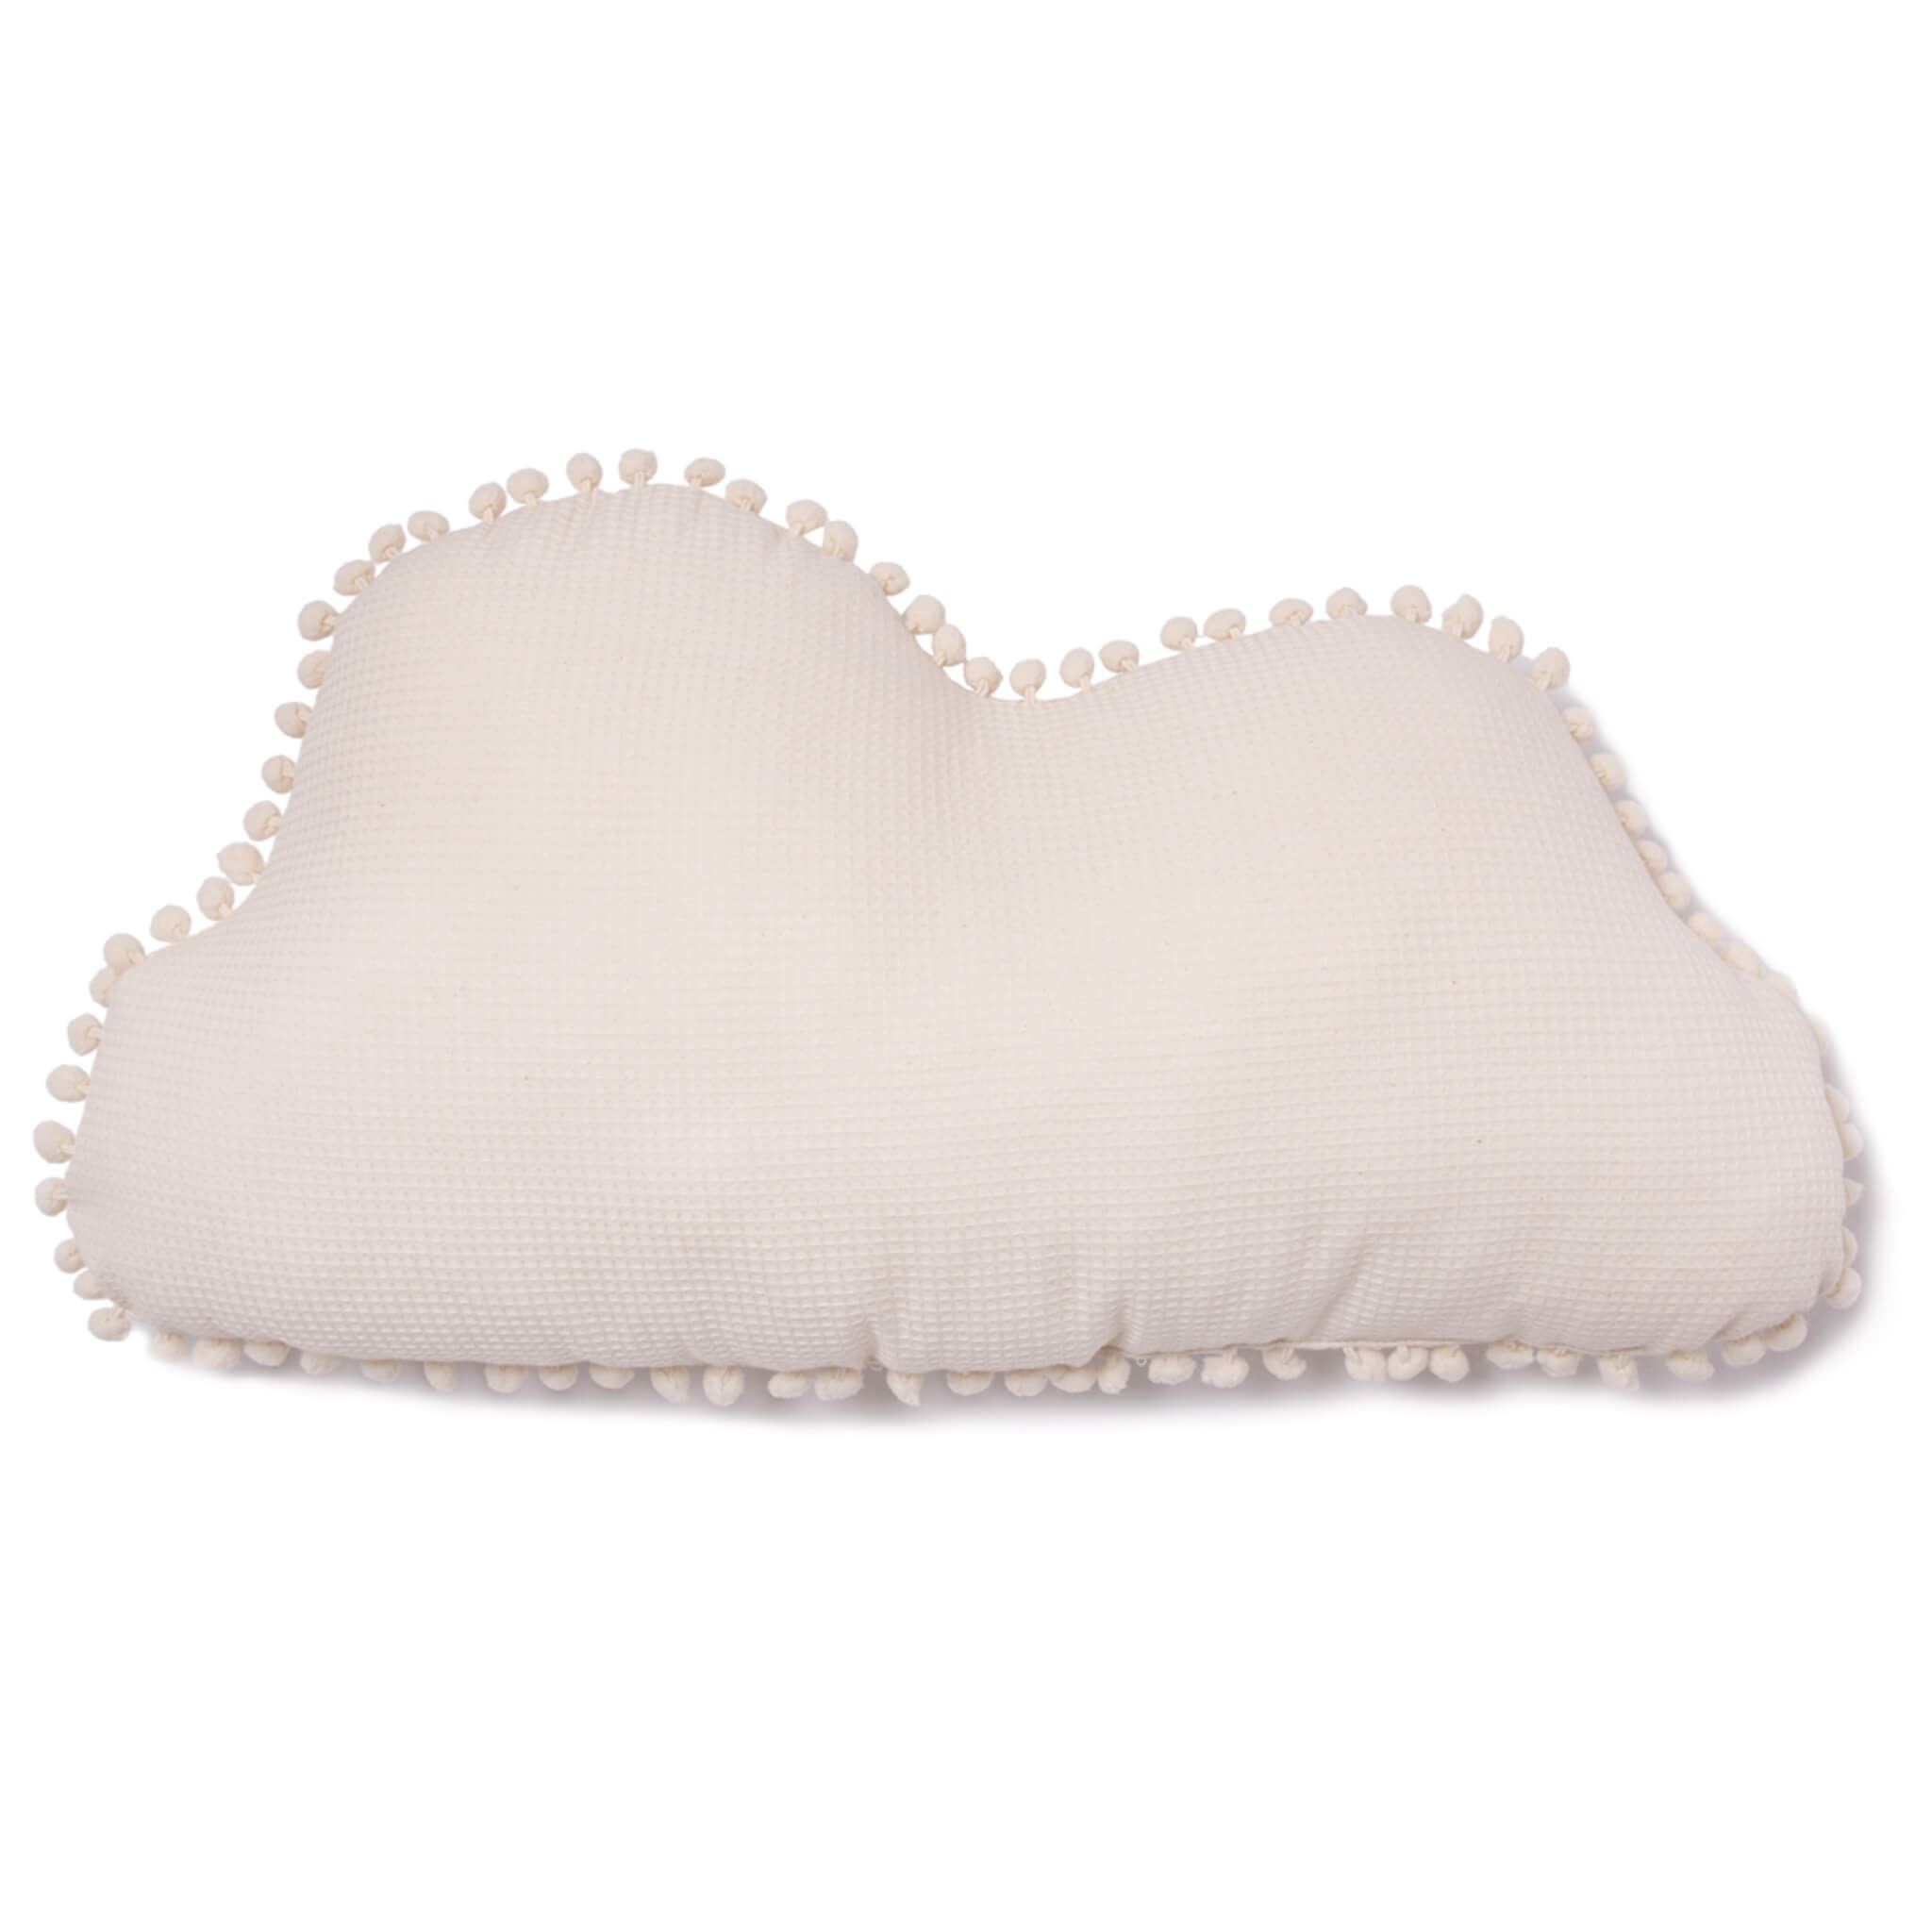 Marshmallow Cloud Cushion - Natural